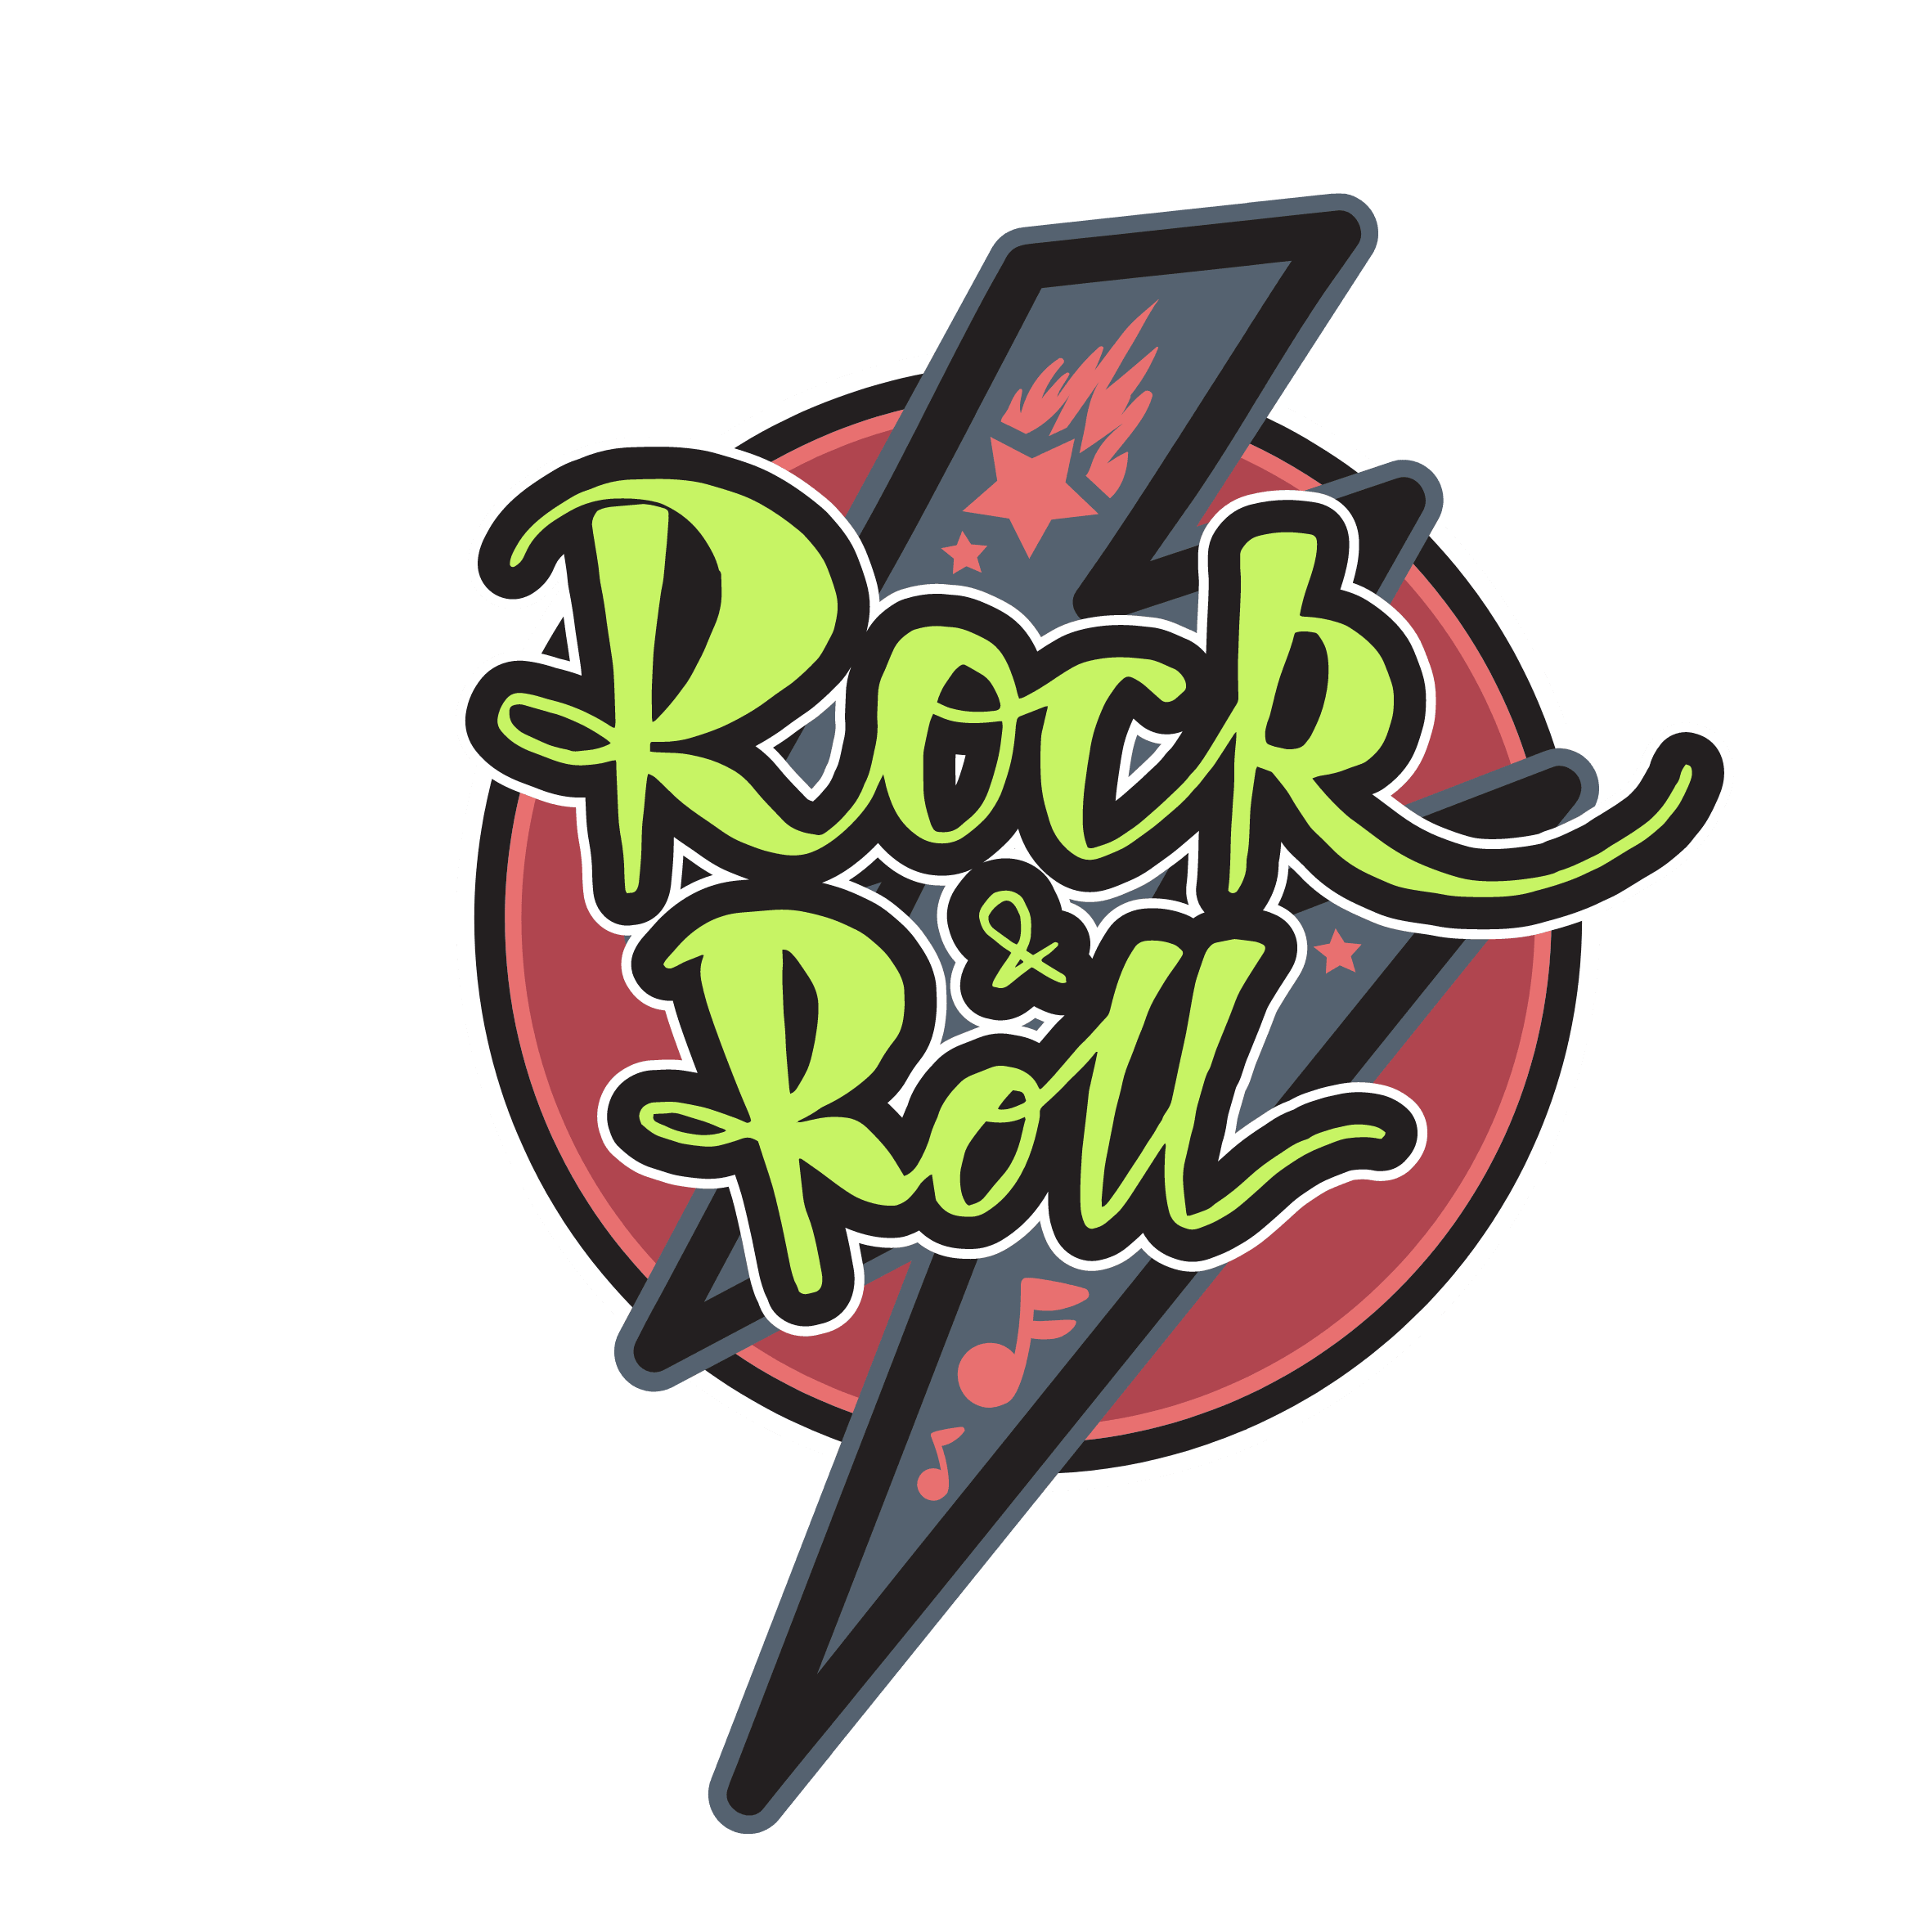 Rock and Roll thunder şeffaf 6cm